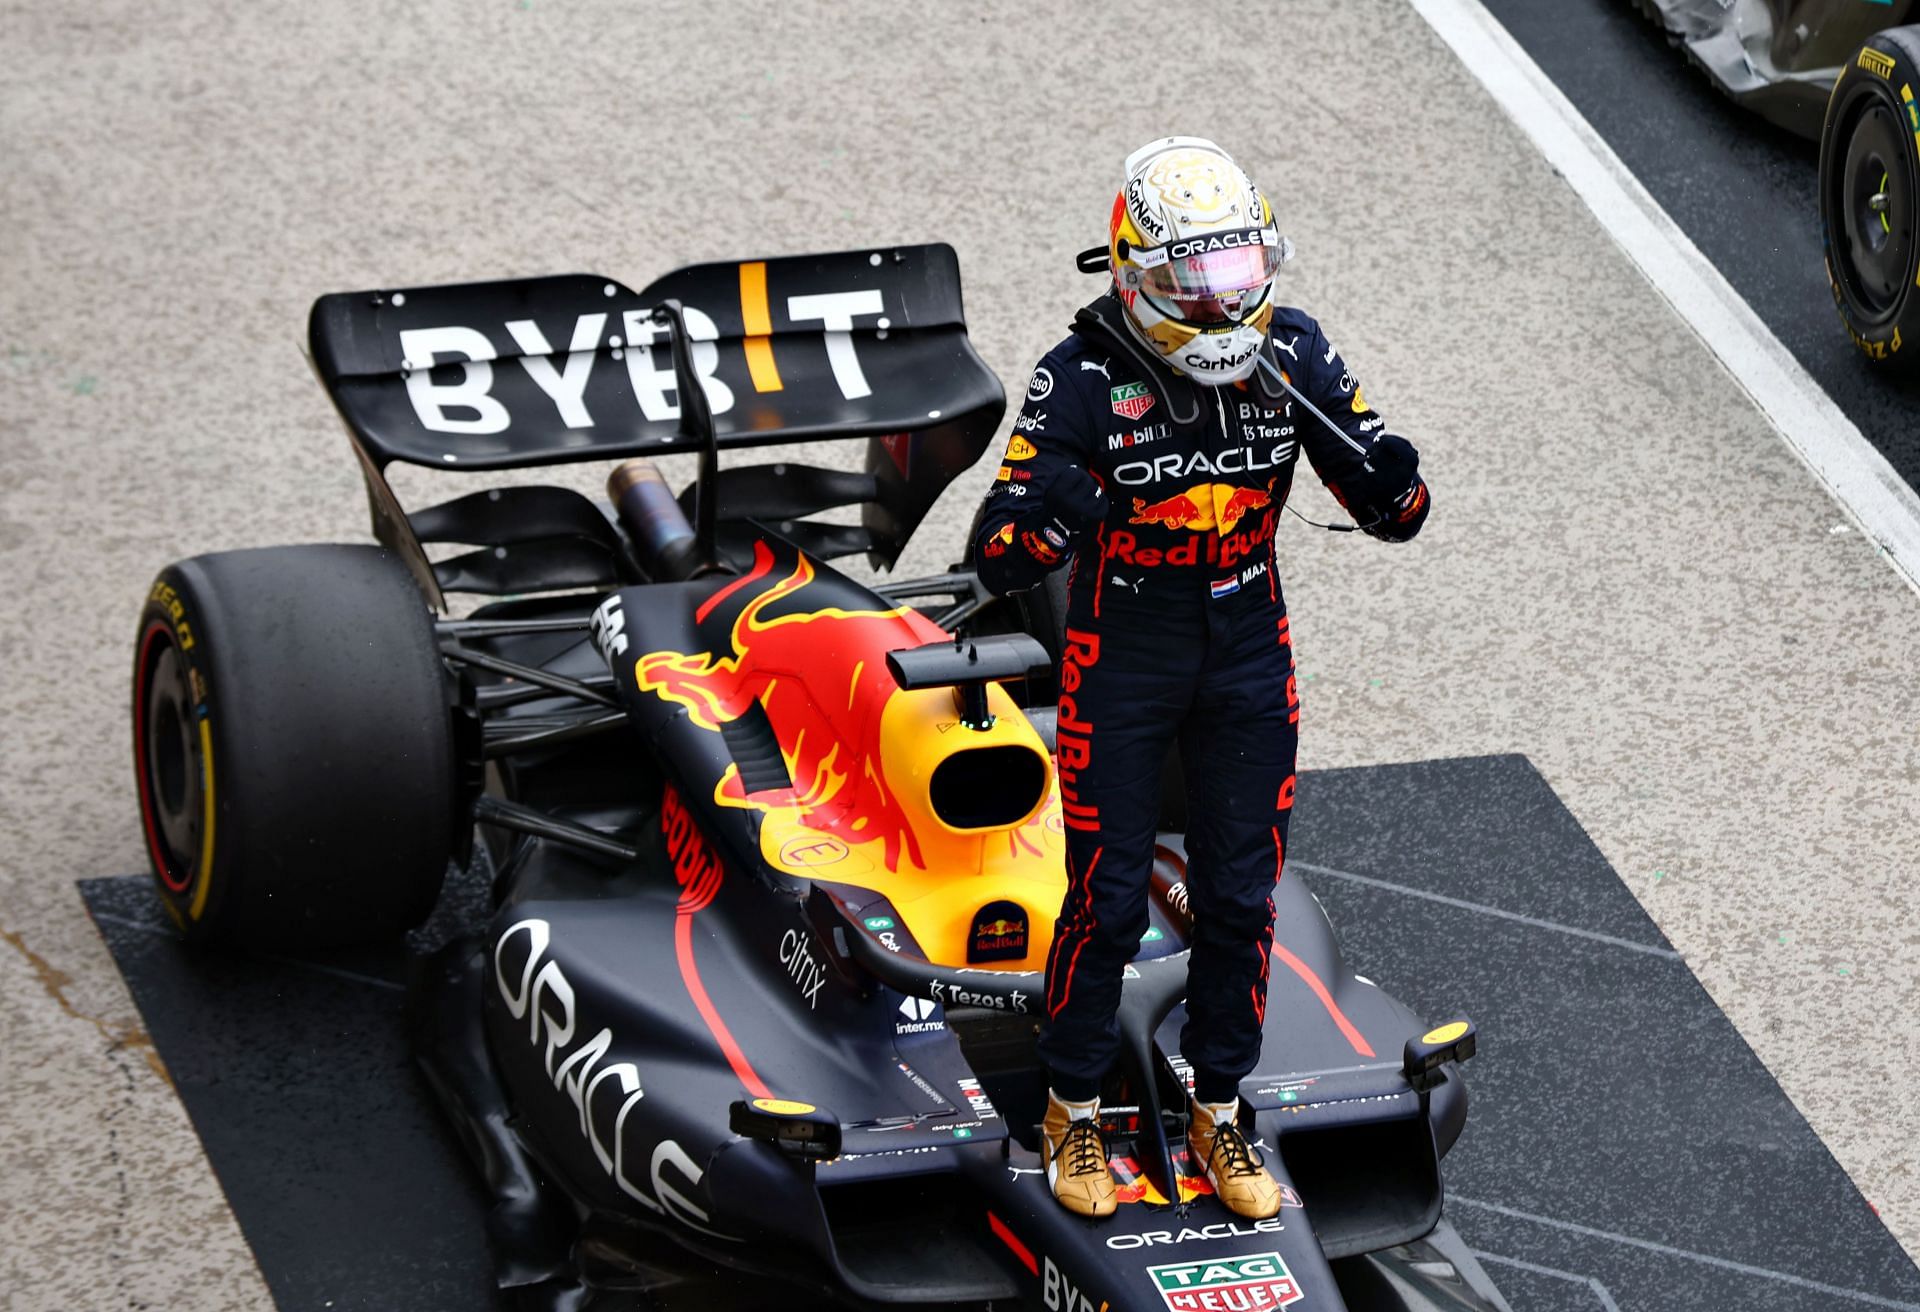 F1 Grand Prix of Hungary - Max Verstappen wins at Hungaroring